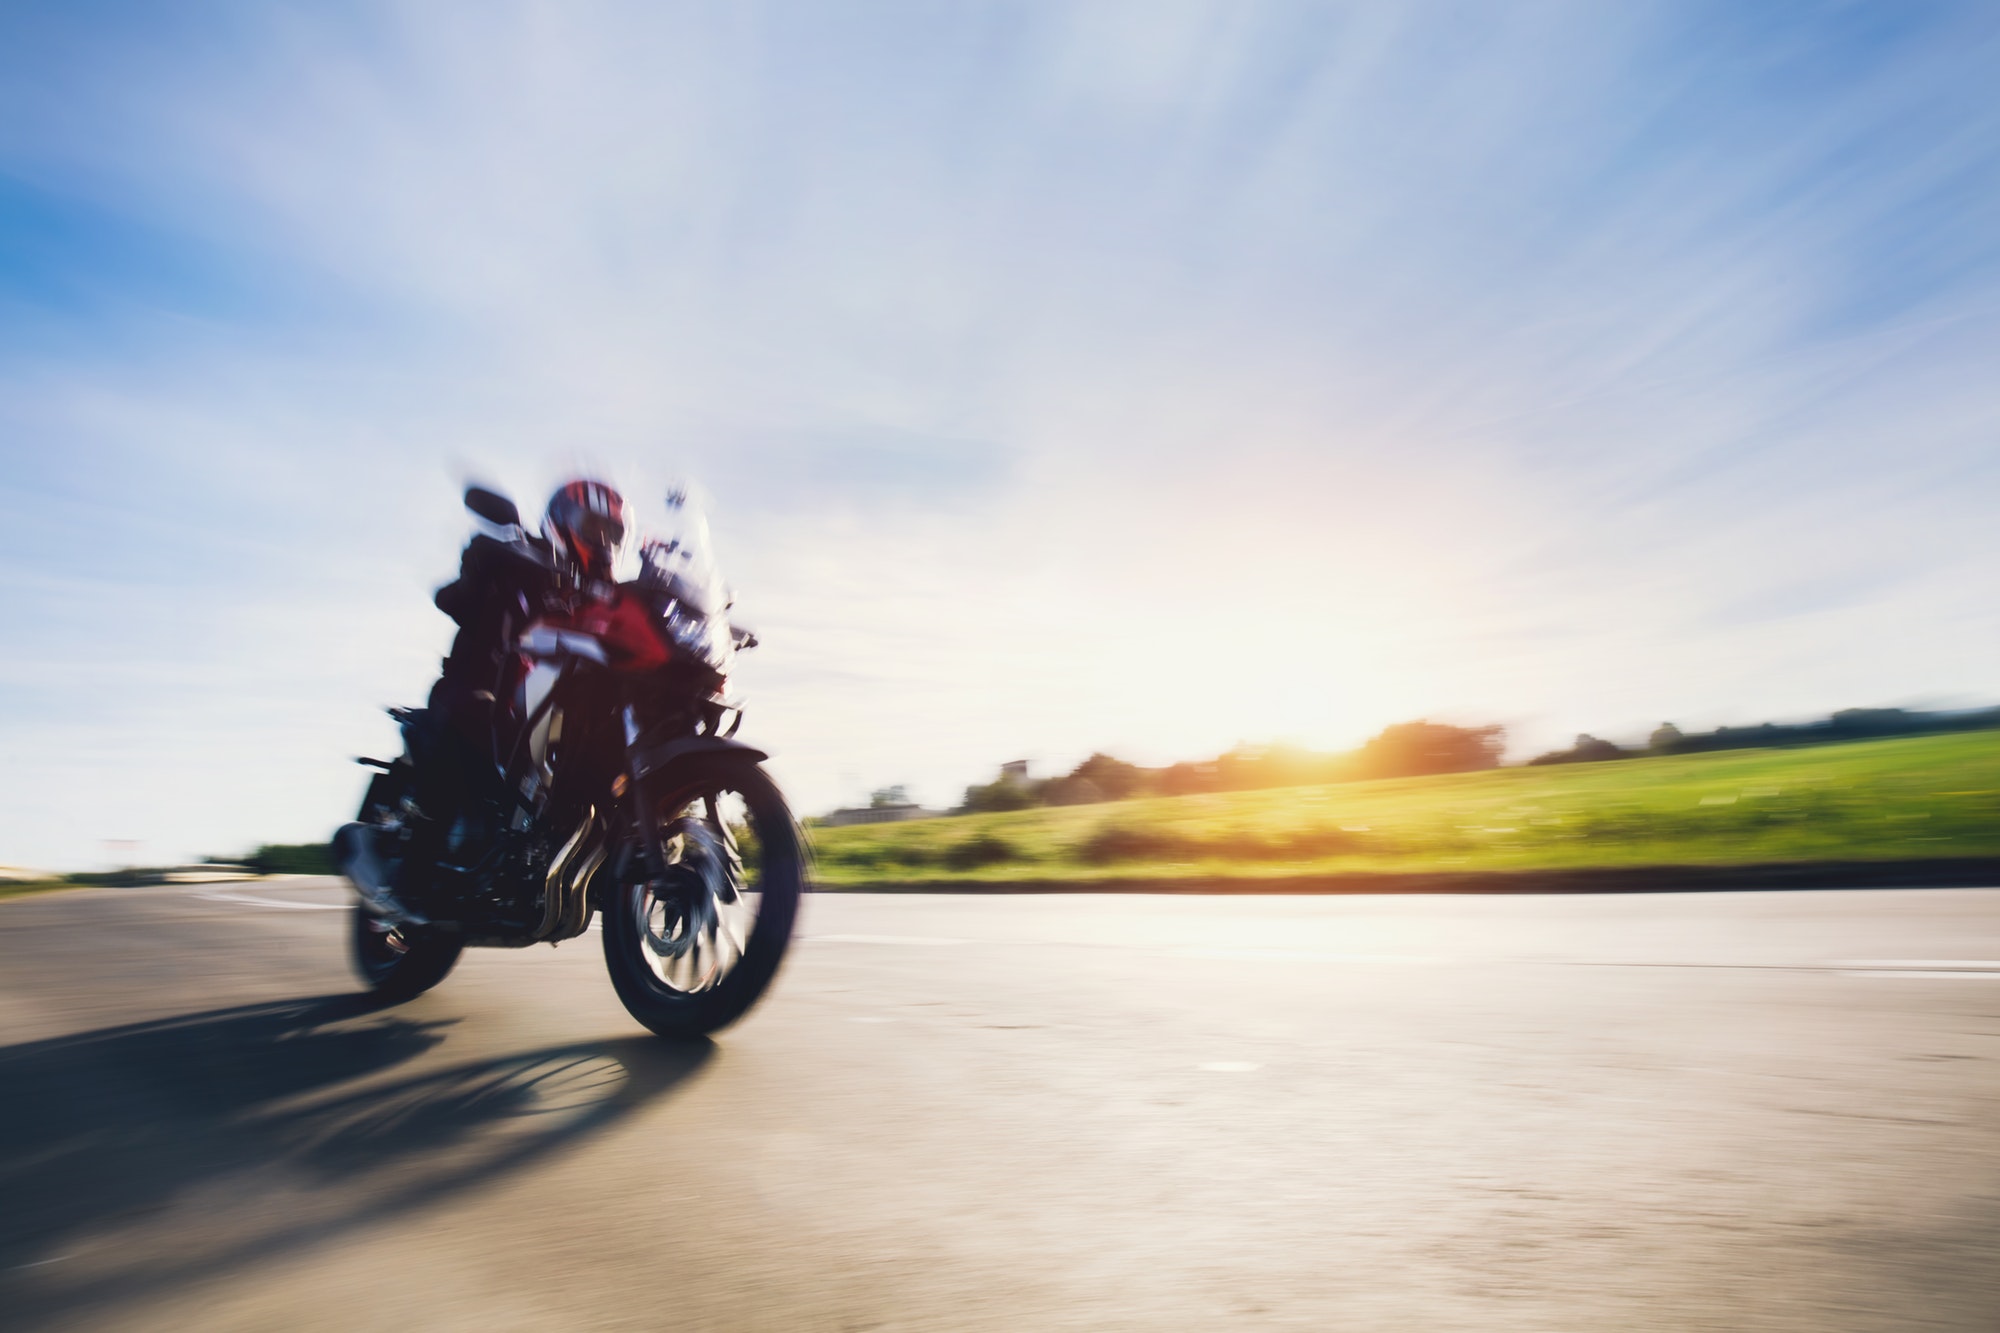 Drive a motorbike. Fast motorcycle in motion on asphalt road.